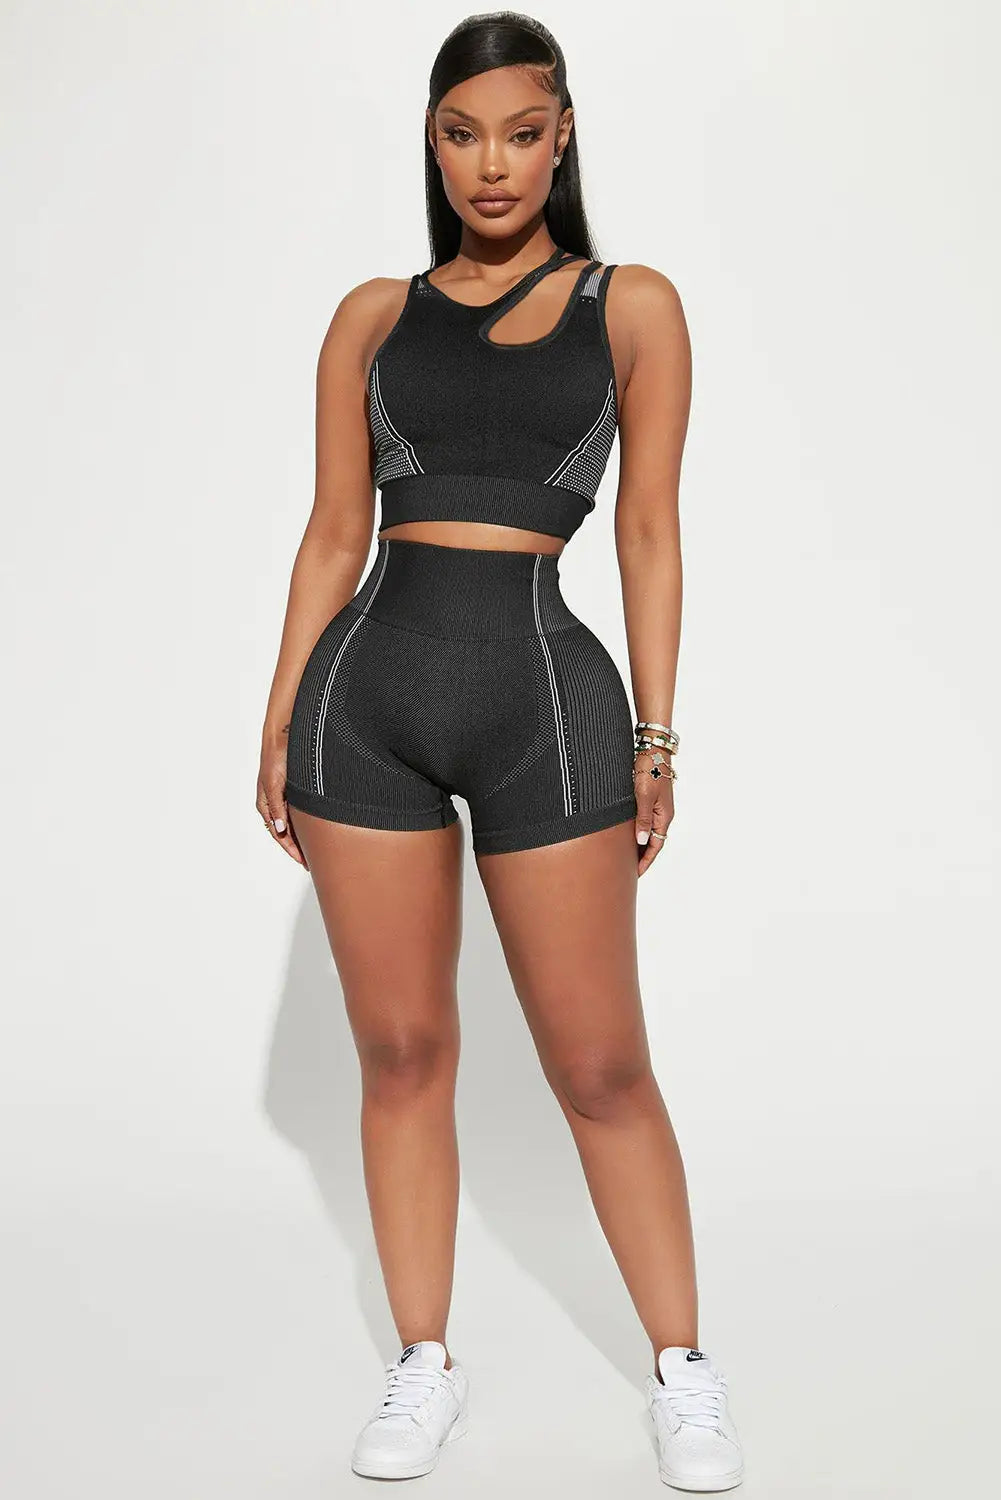 Black strappy mix pattern cutout bra and shorts set - activewear